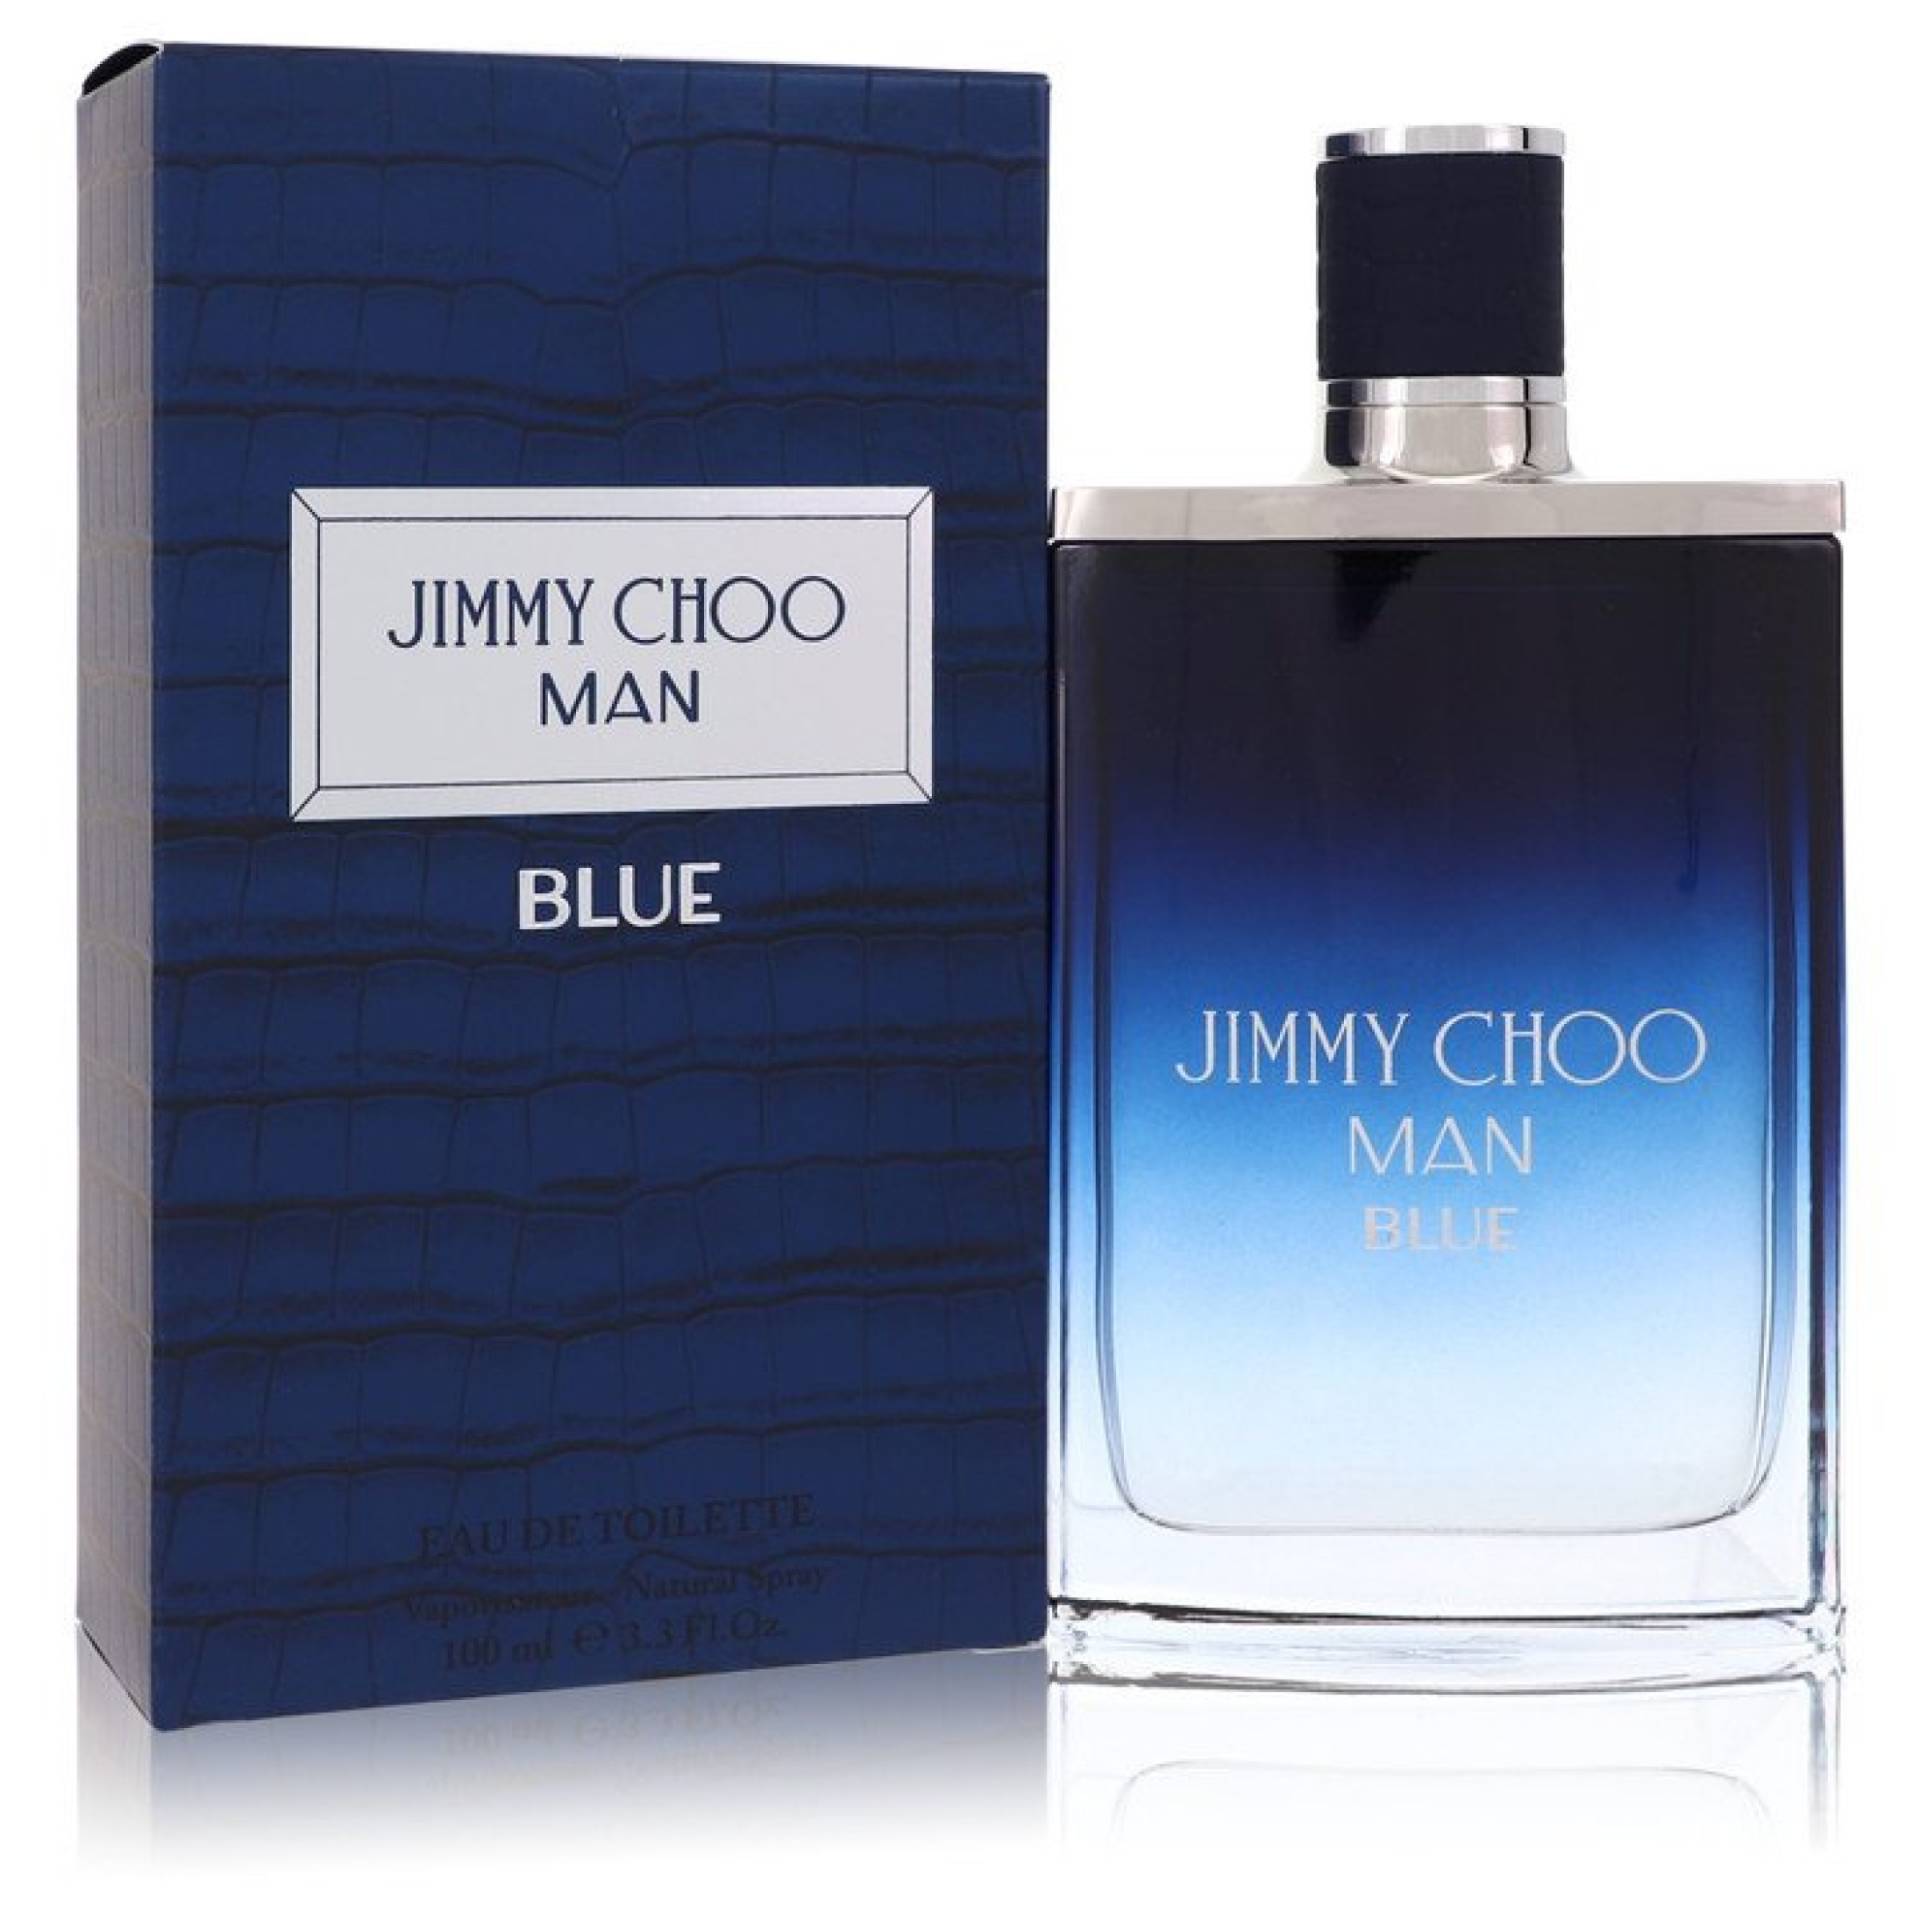 Jimmy Choo Man Blue Eau De Toilette Spray 100 ml von Jimmy Choo